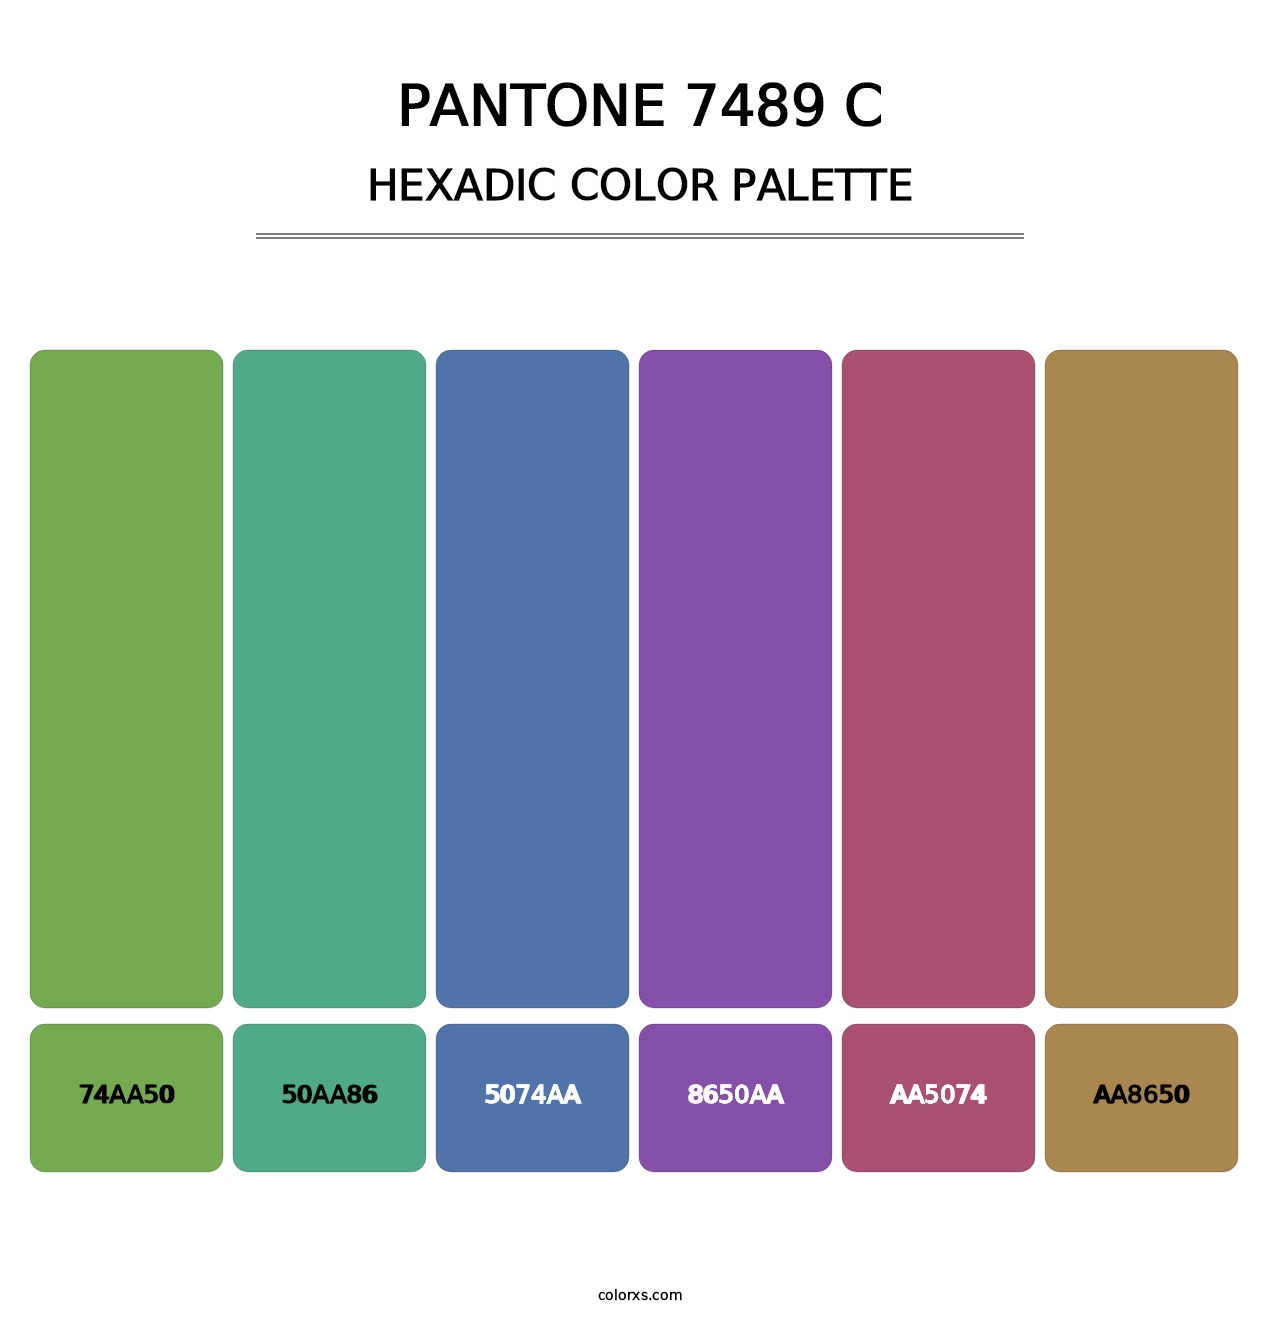 PANTONE 7489 C - Hexadic Color Palette